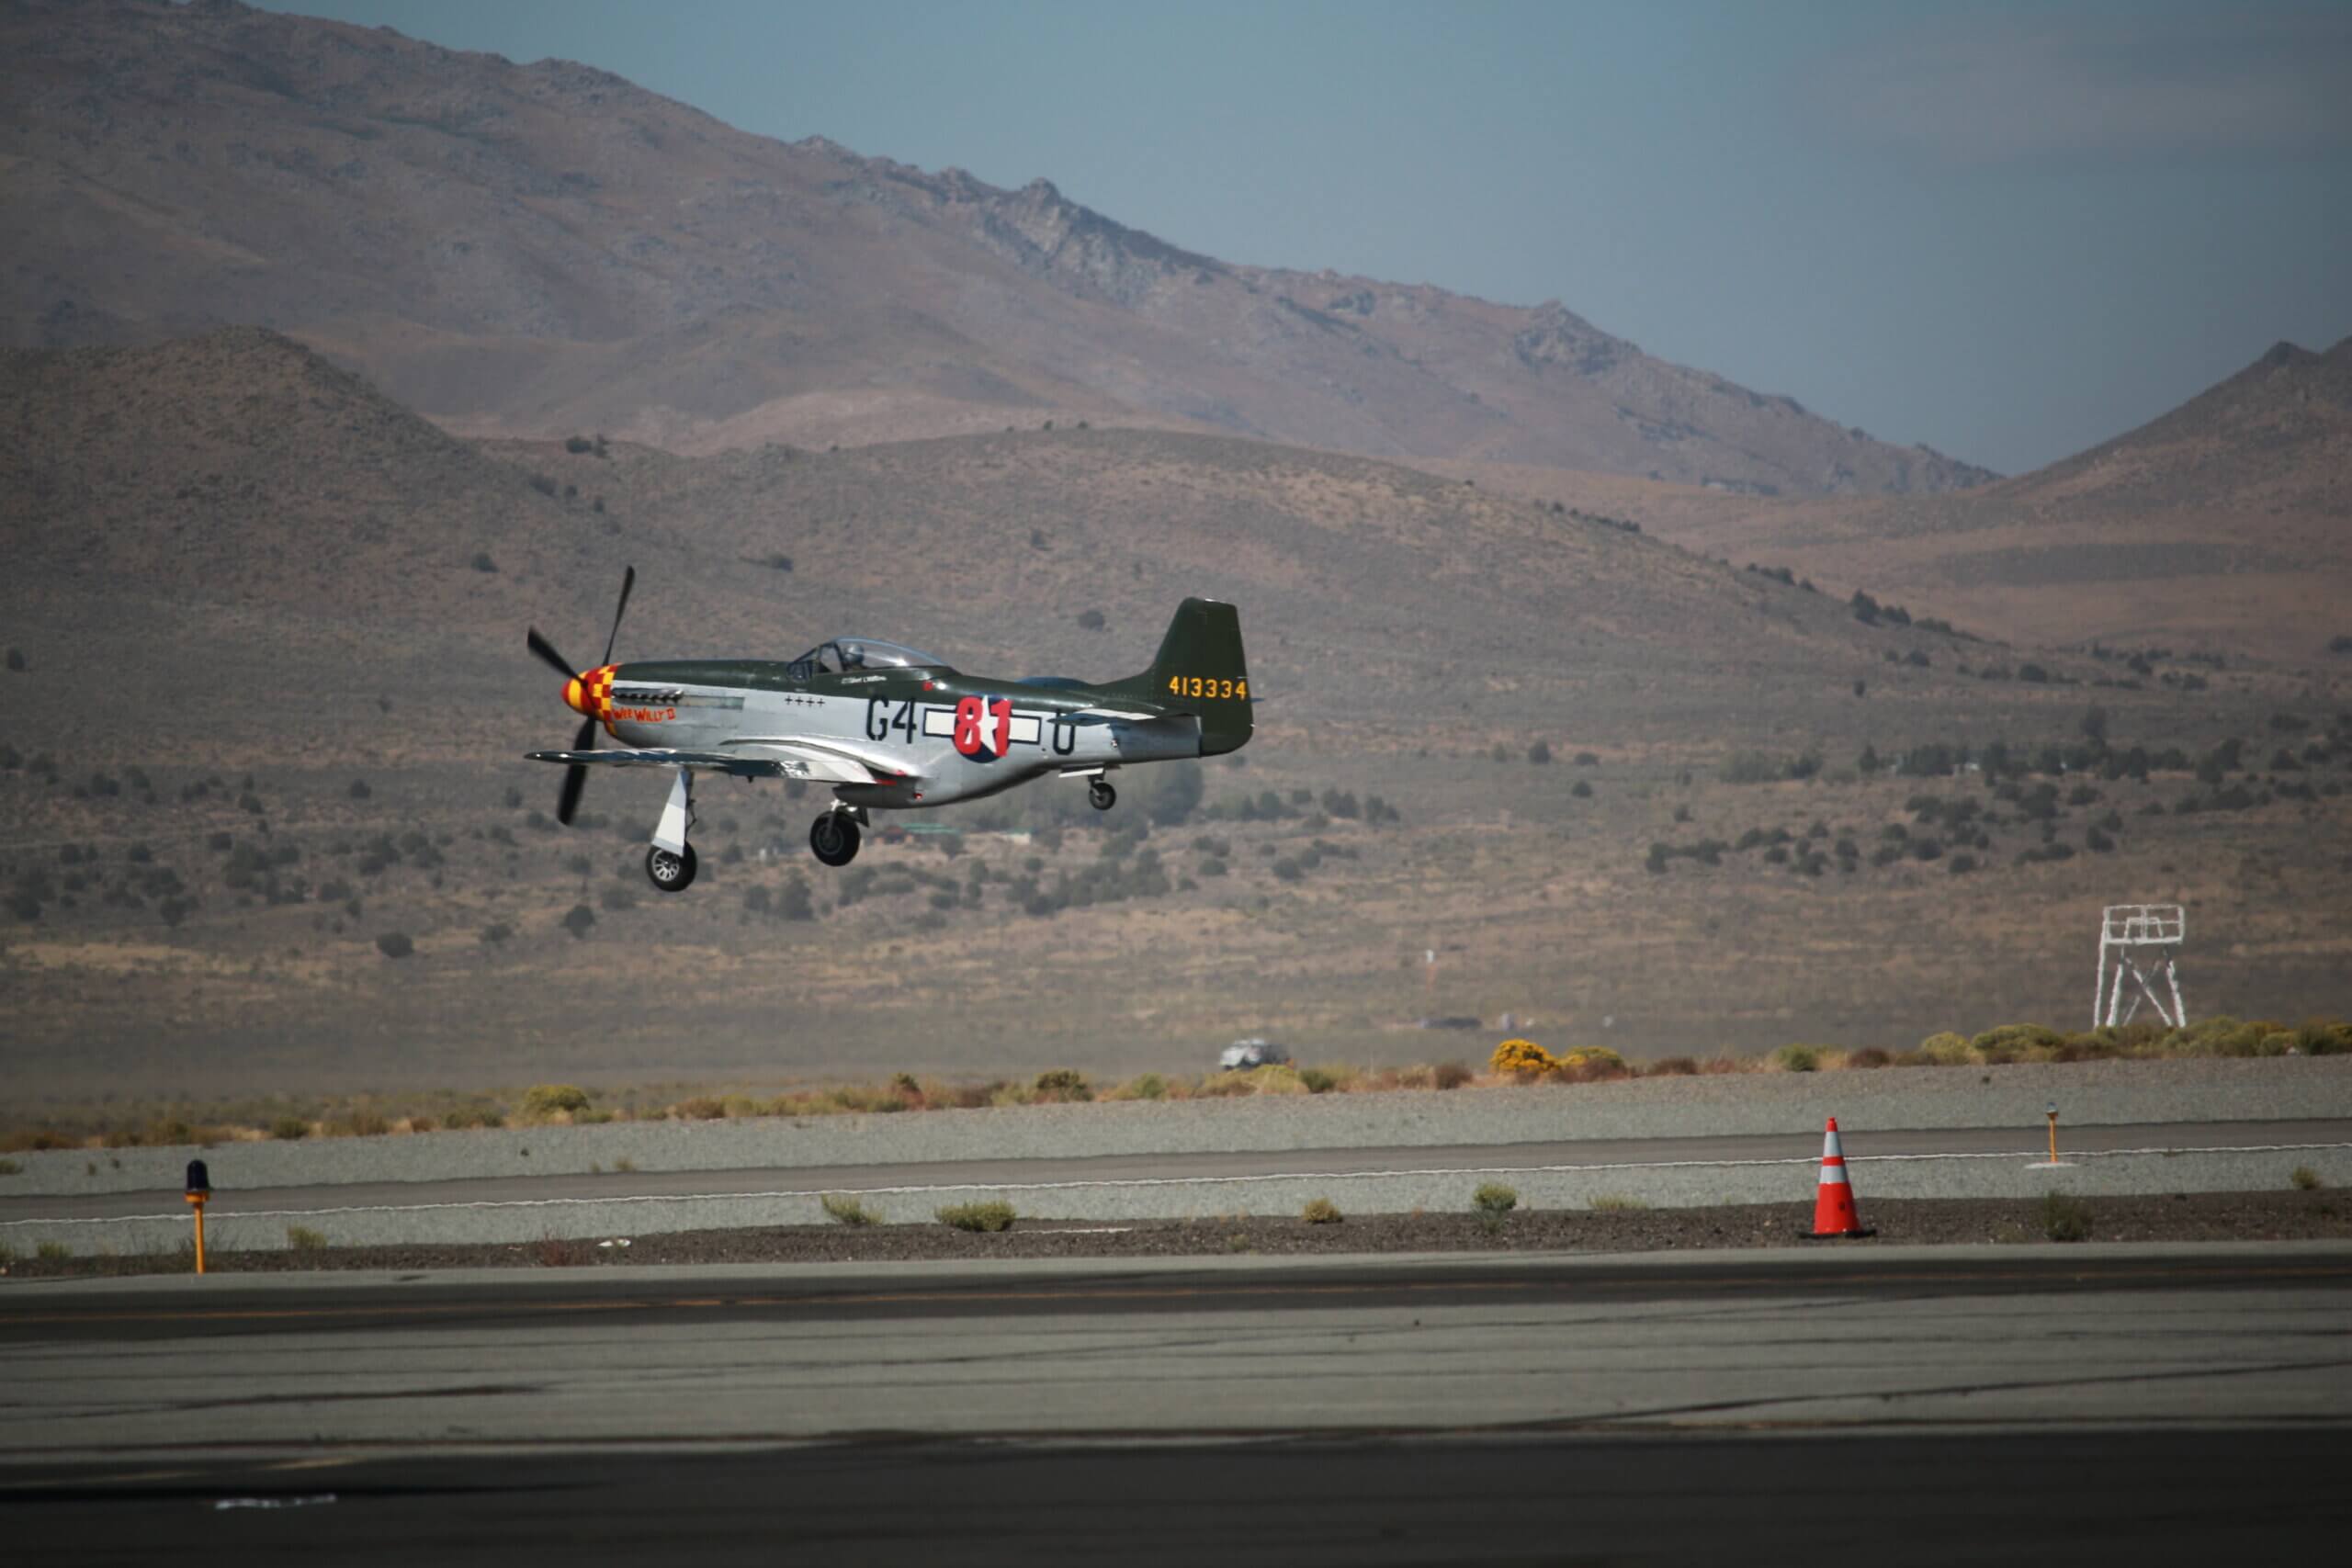 A P-51 Mustang on final approach